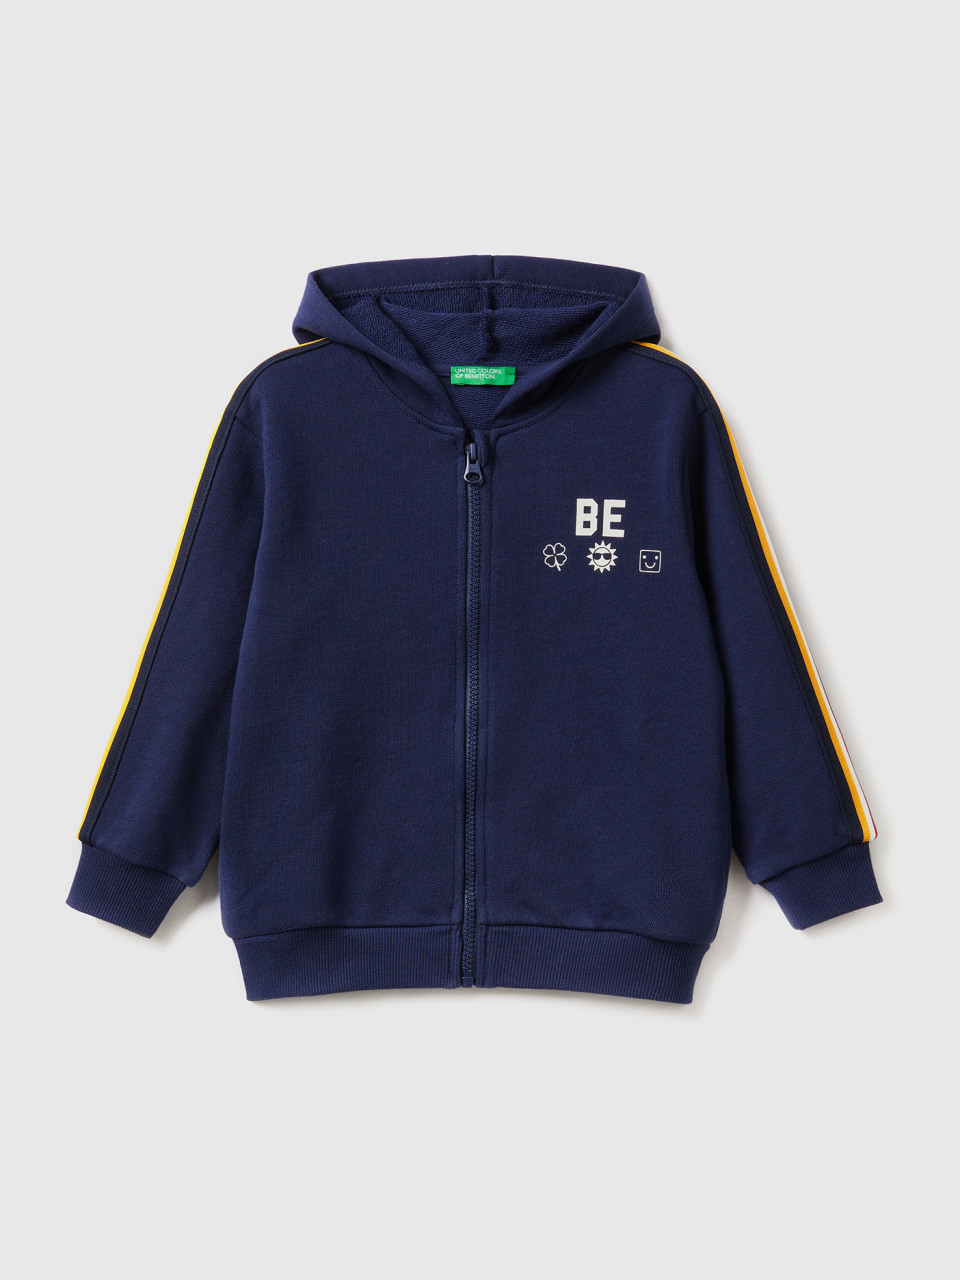 Benetton, Sweatshirt With be Print, Dark Blue, Kids